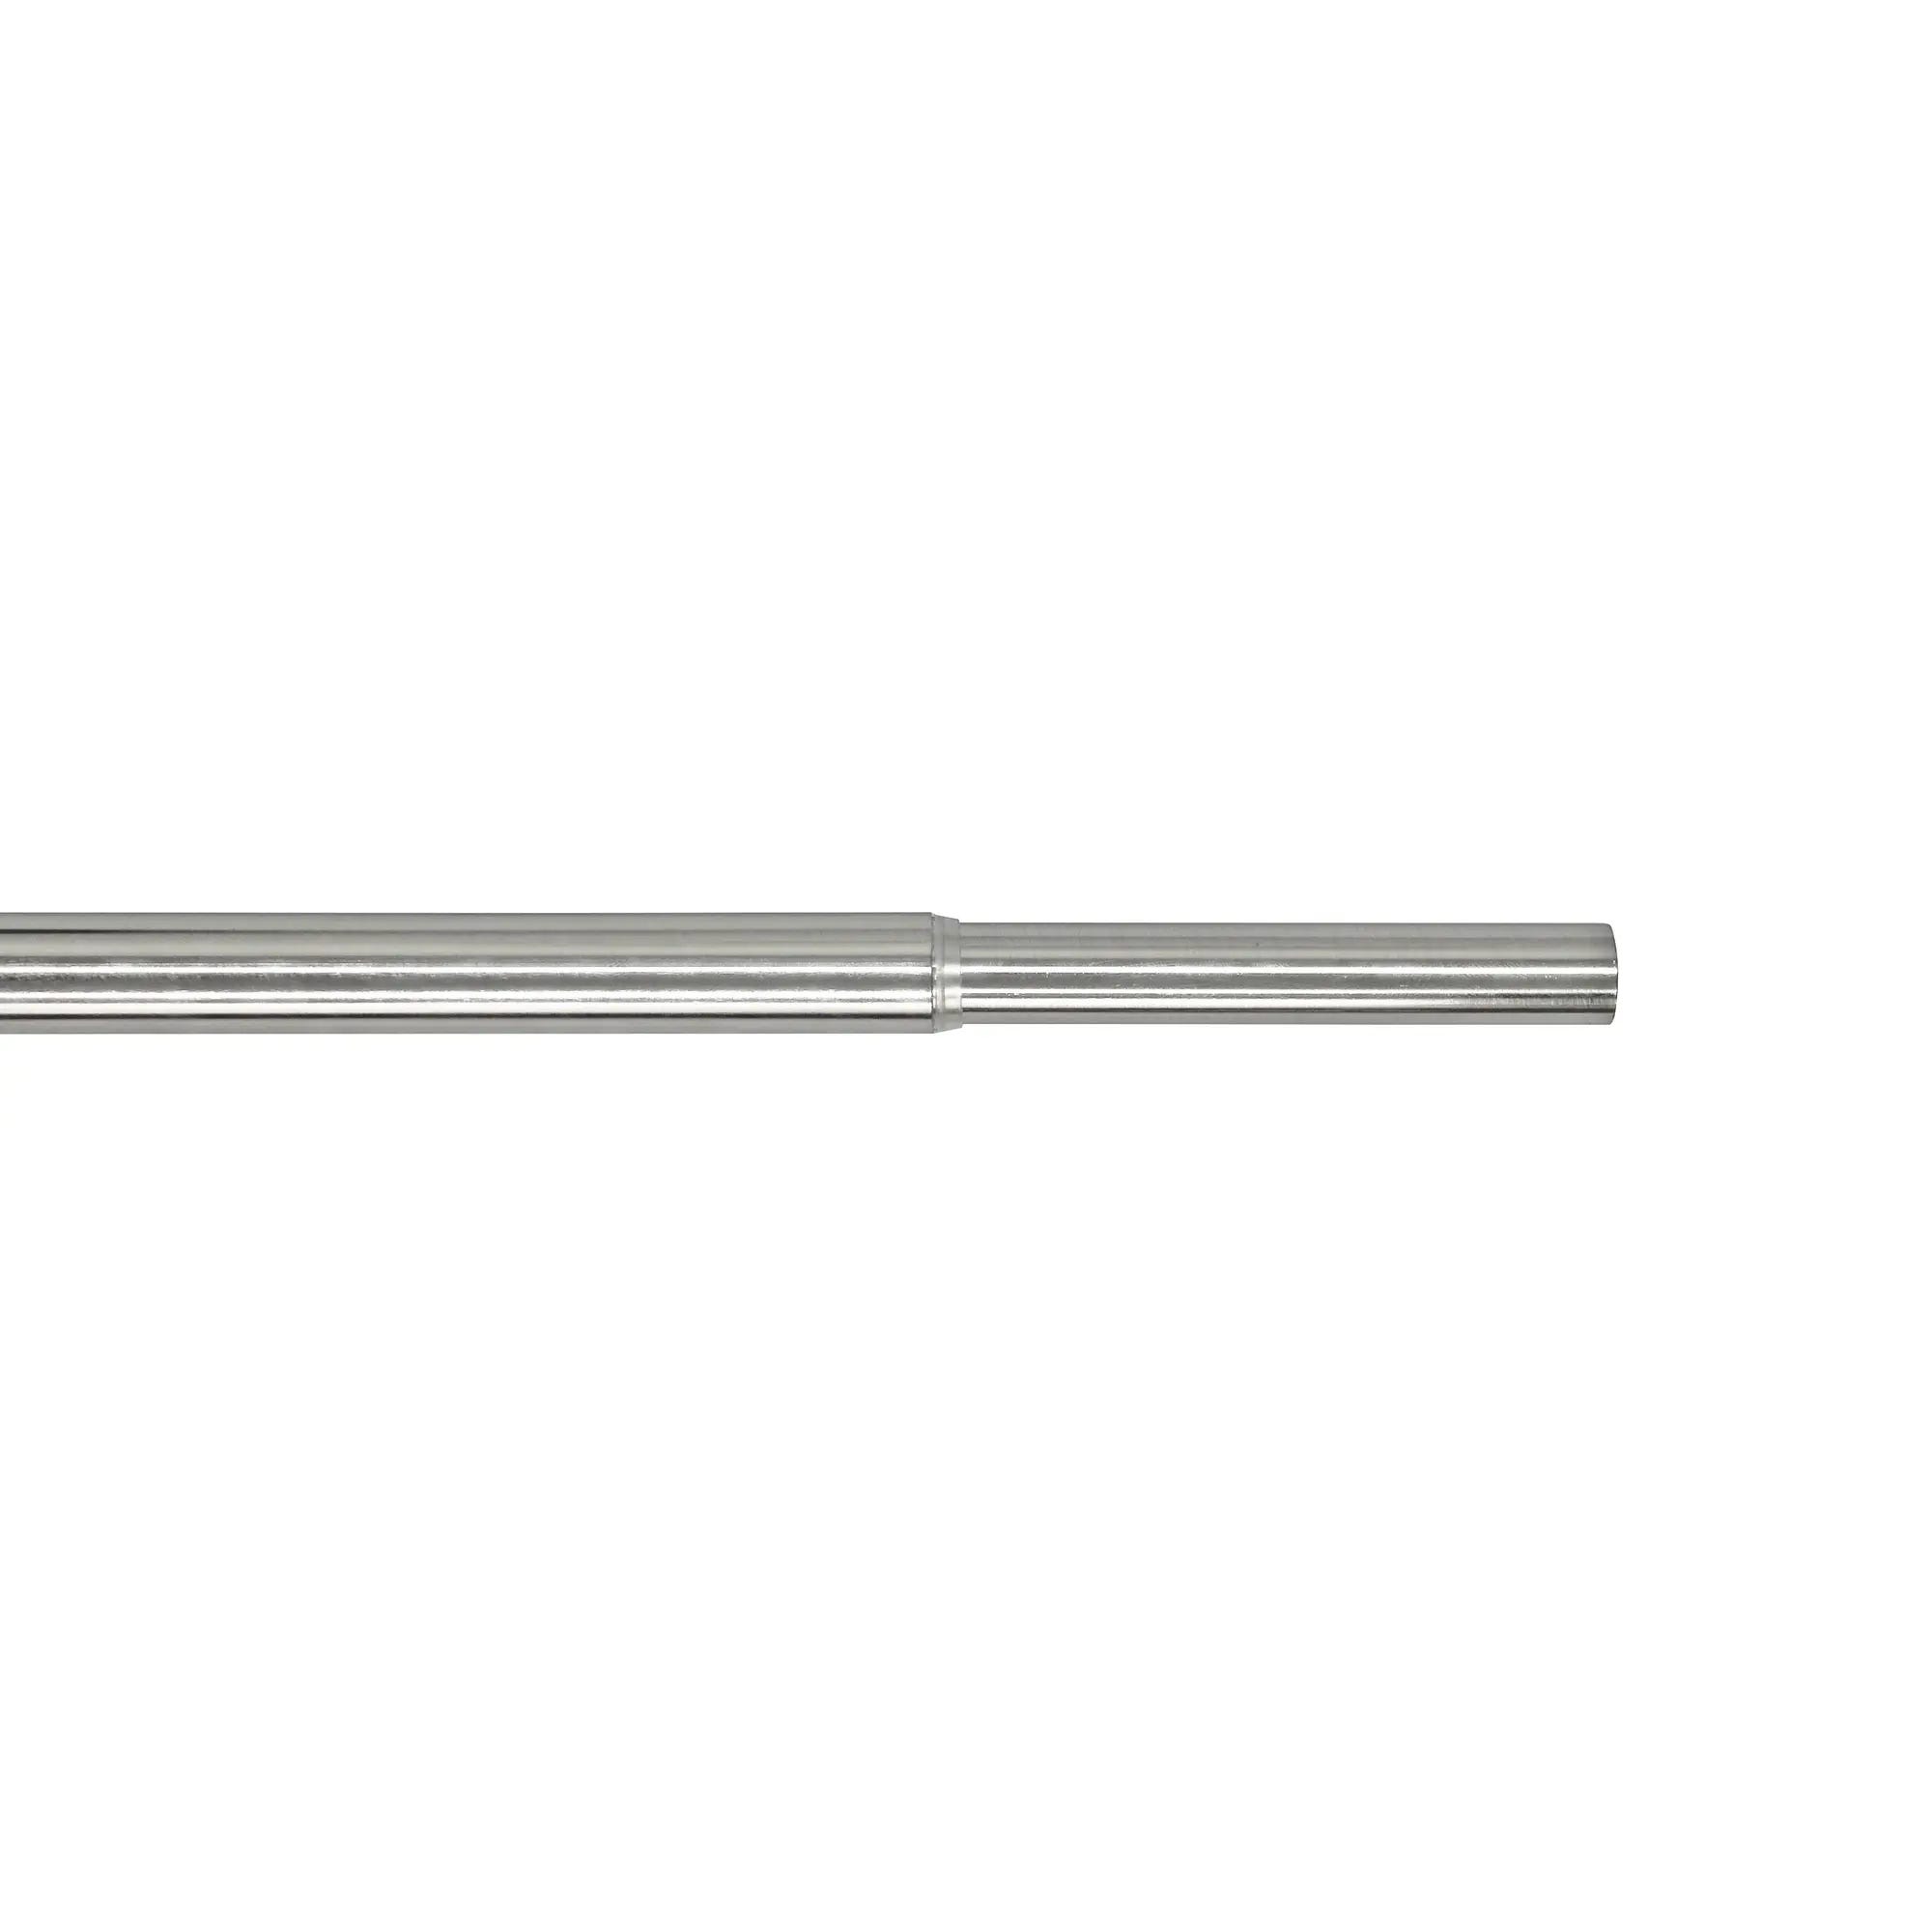 Tringle à rideau nickel Kali, L.160 - 300 cm, diam.20 mm, INSPIRE